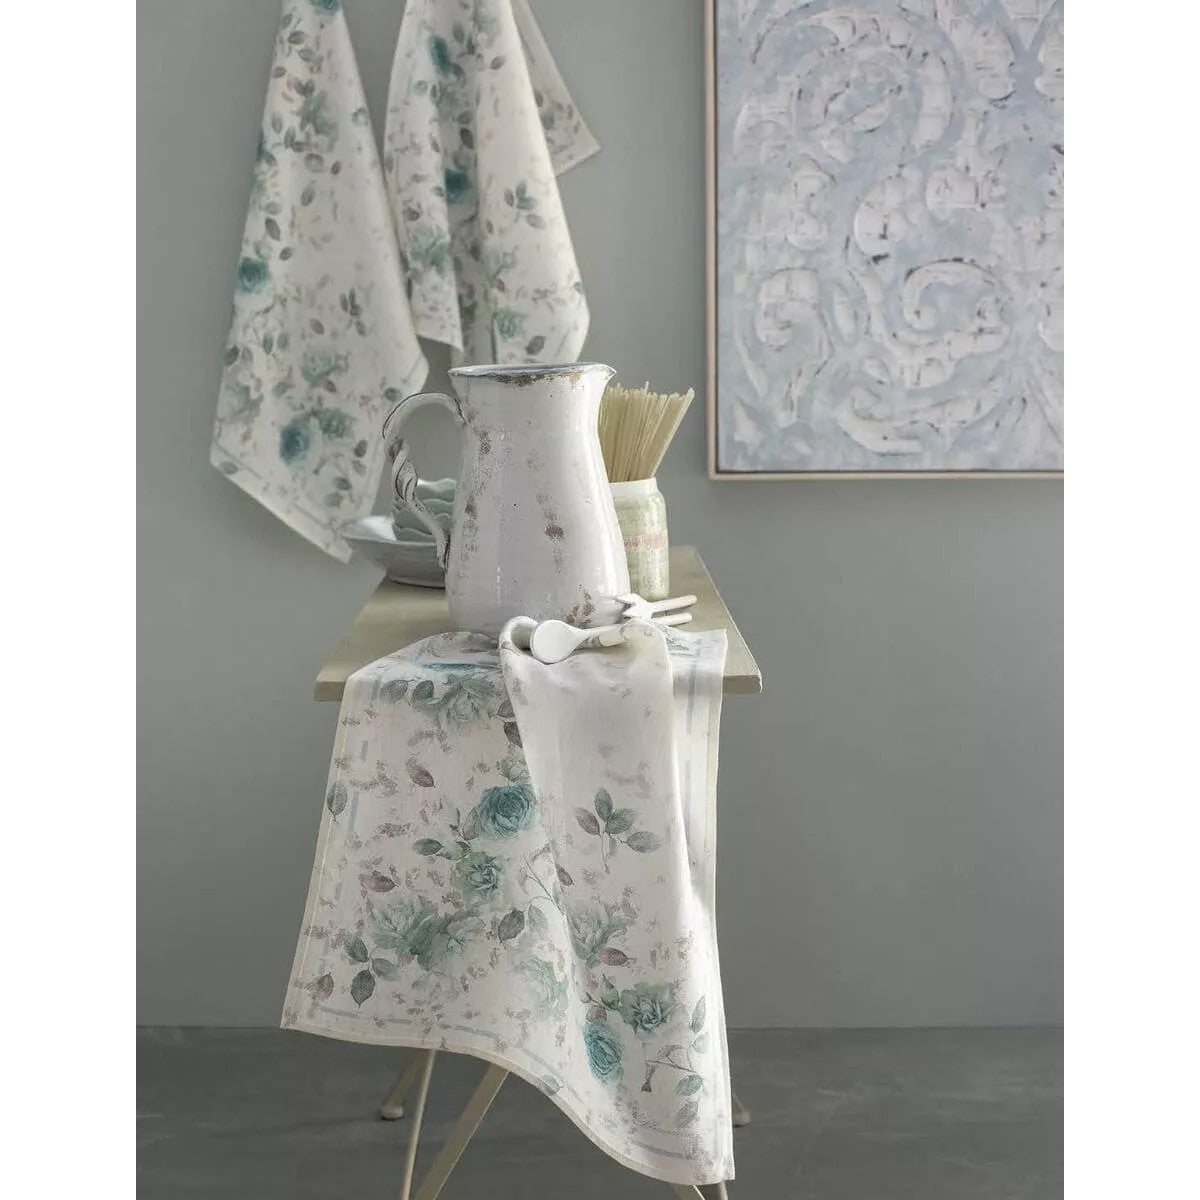 Decorative tablecloth Labuan Blumarine 170x270